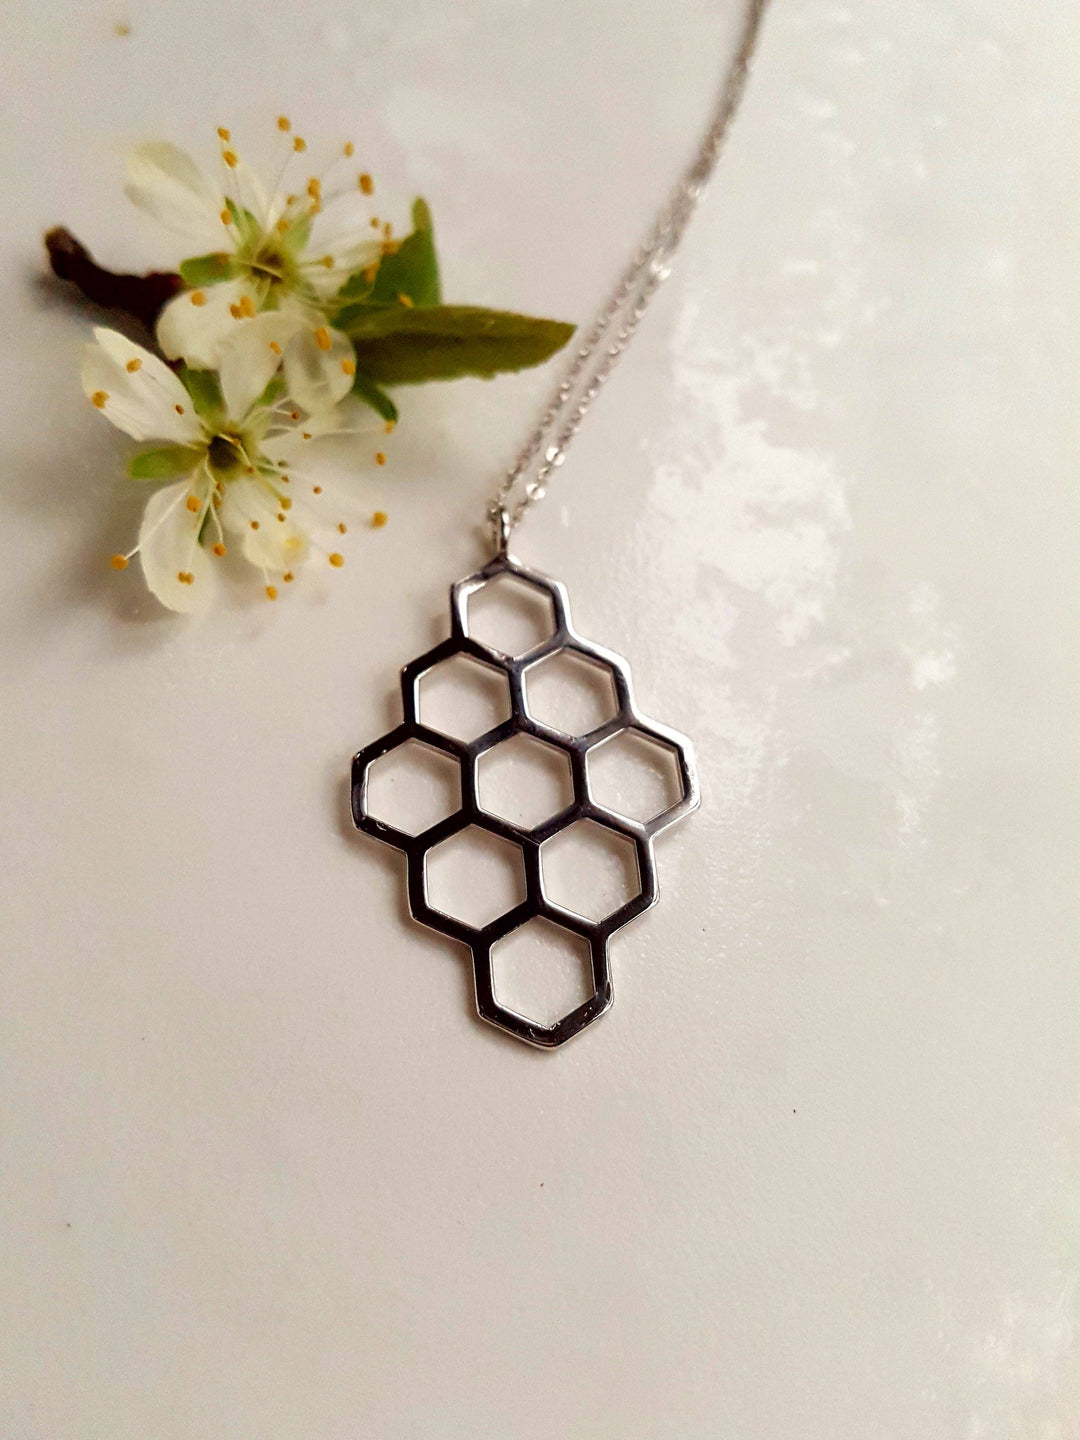 Joie Designs honeycomb necklace